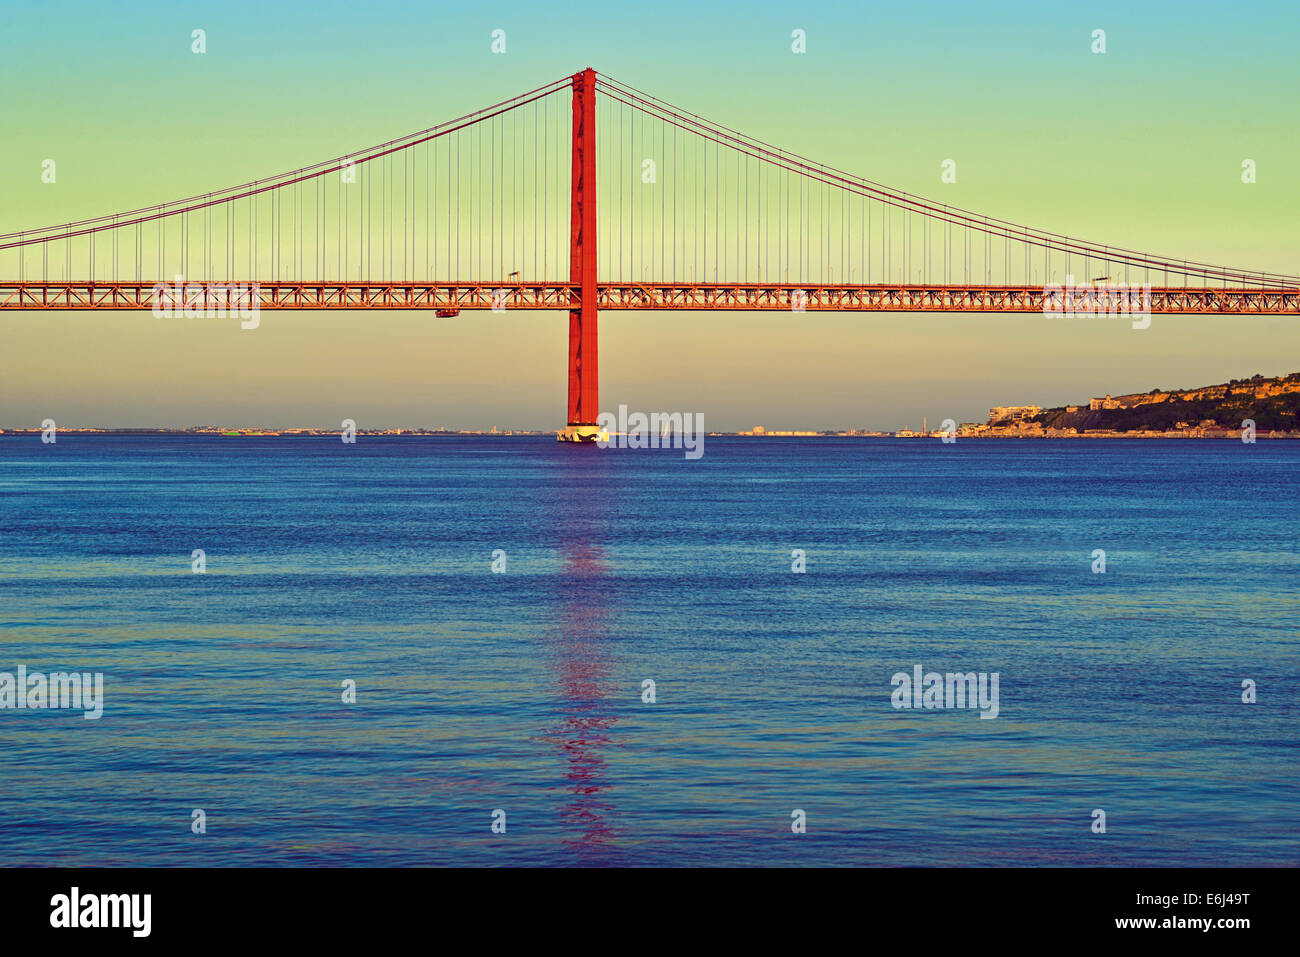 Portufal, Lisbon: Scenic evening view of the red bridge Ponte 25 de Abril Stock Photo